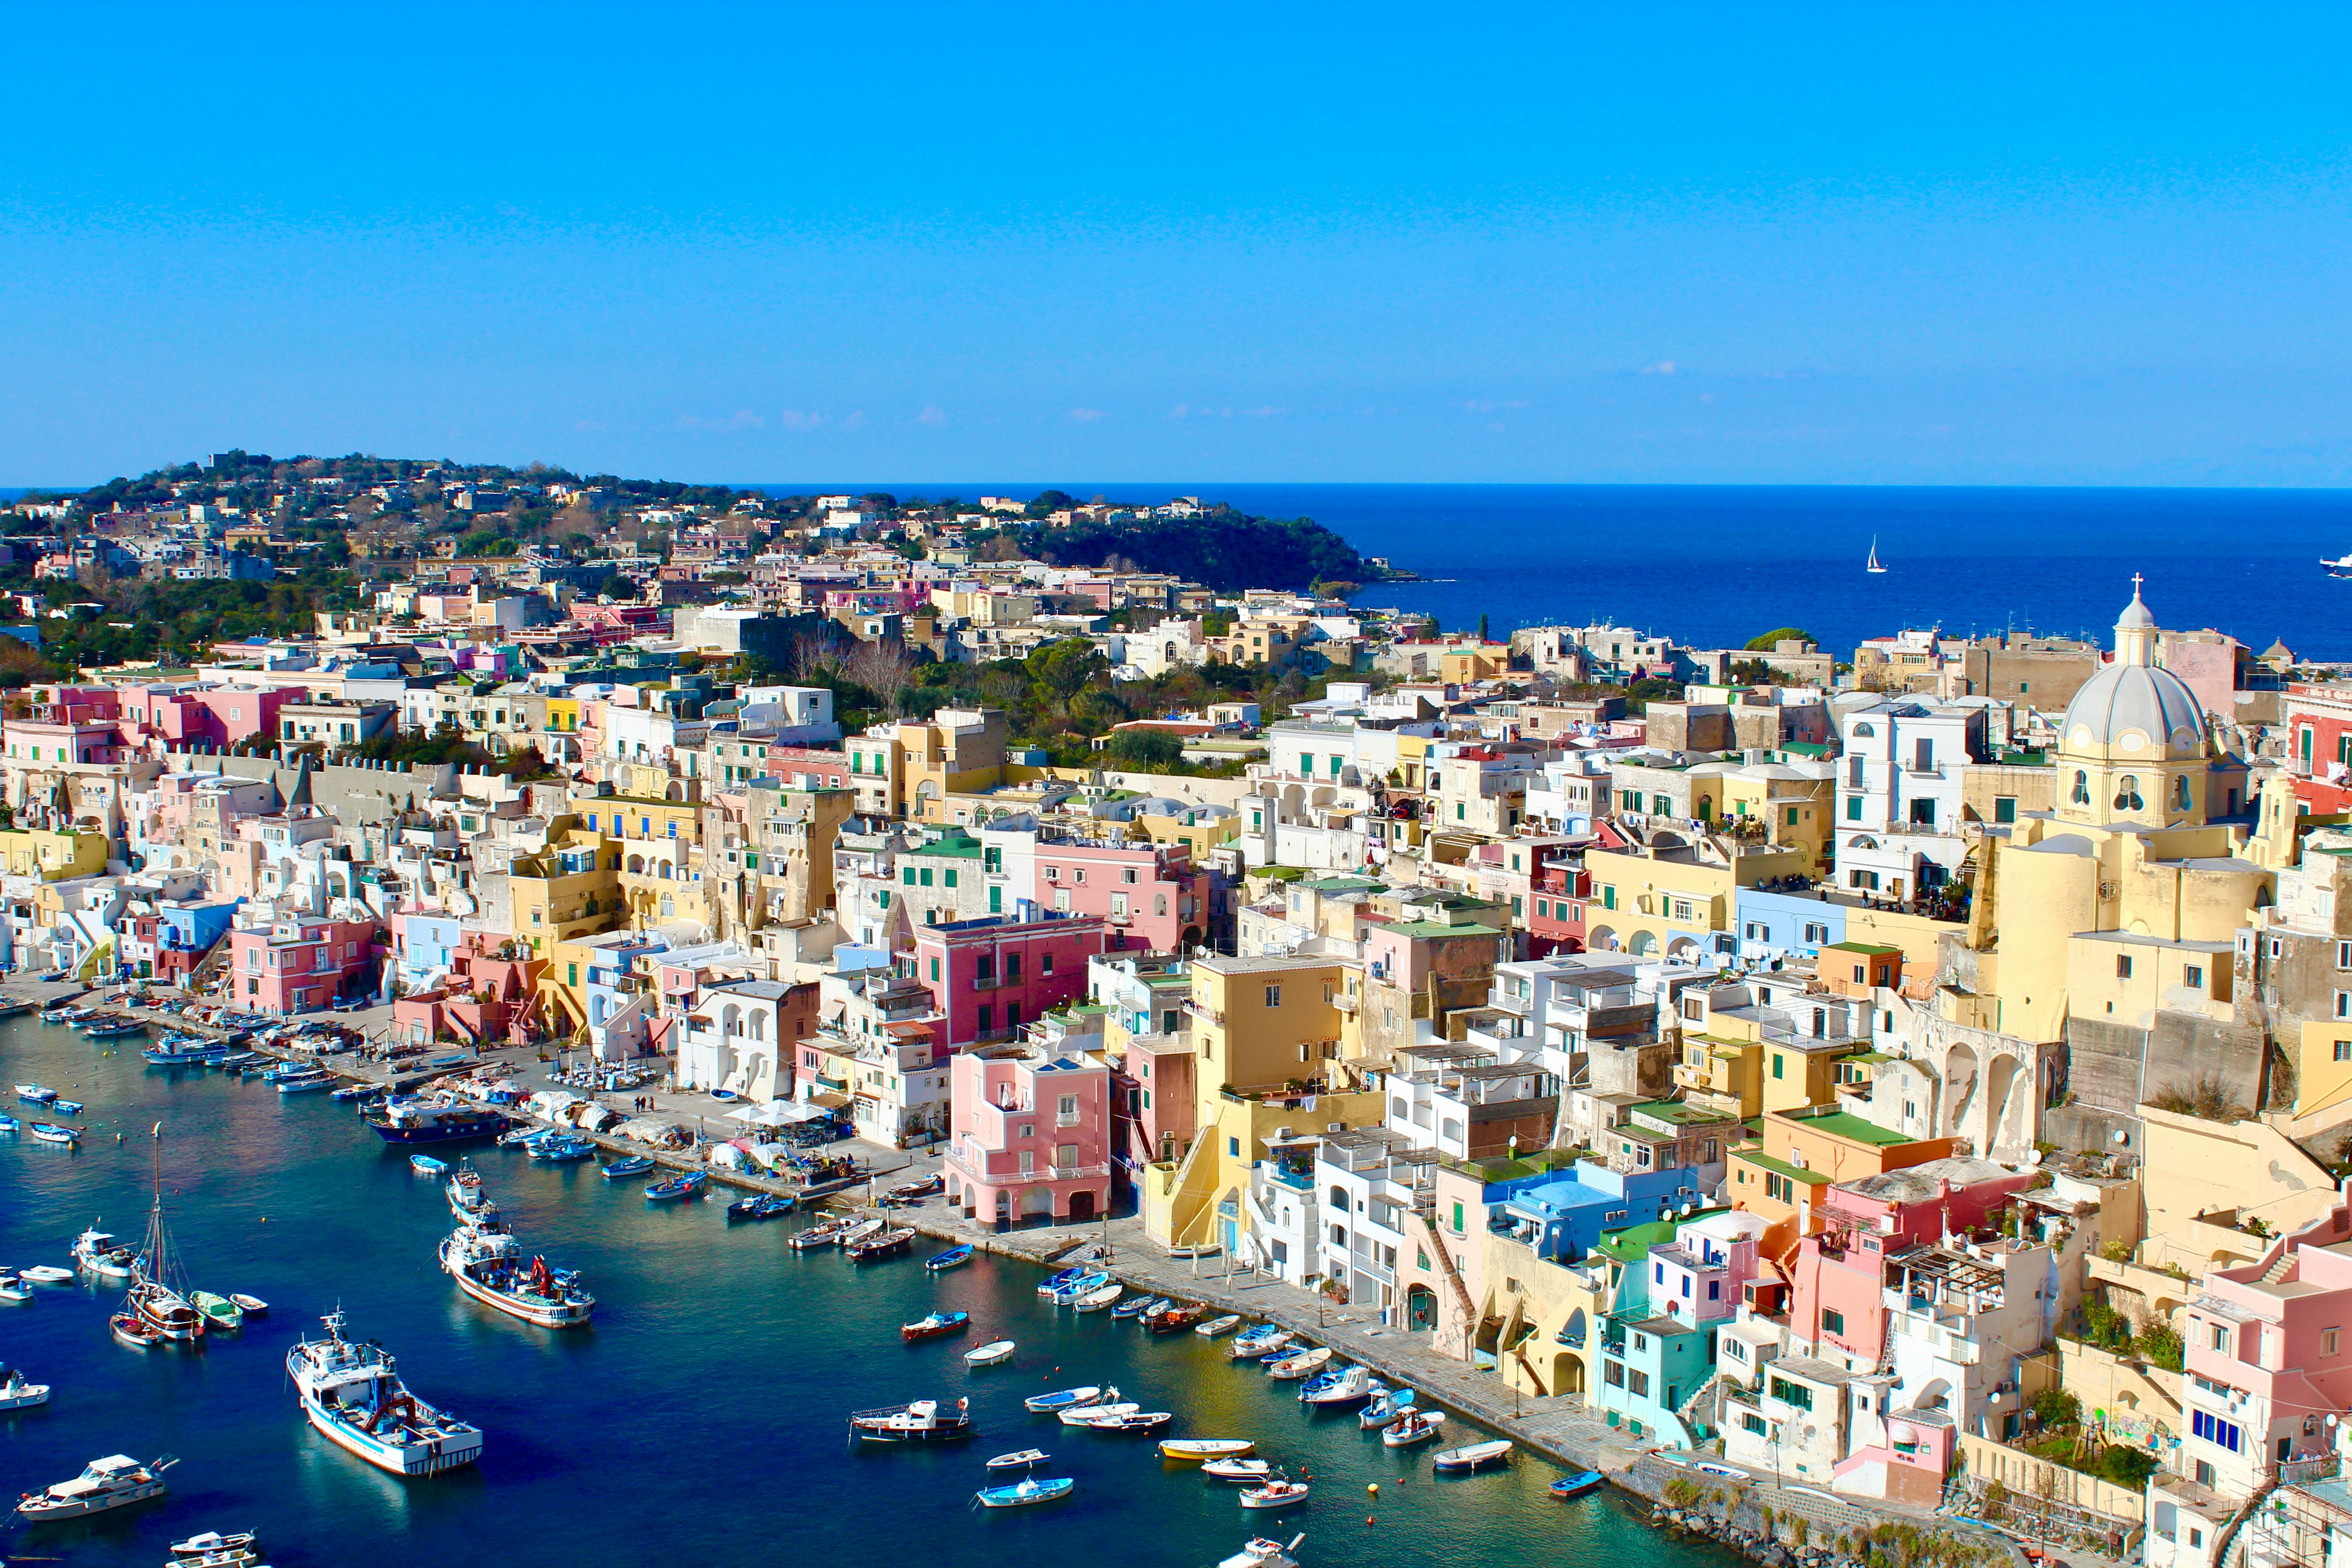 6. Les îles du golfe de Naples : Capri, Ischia et Procida 